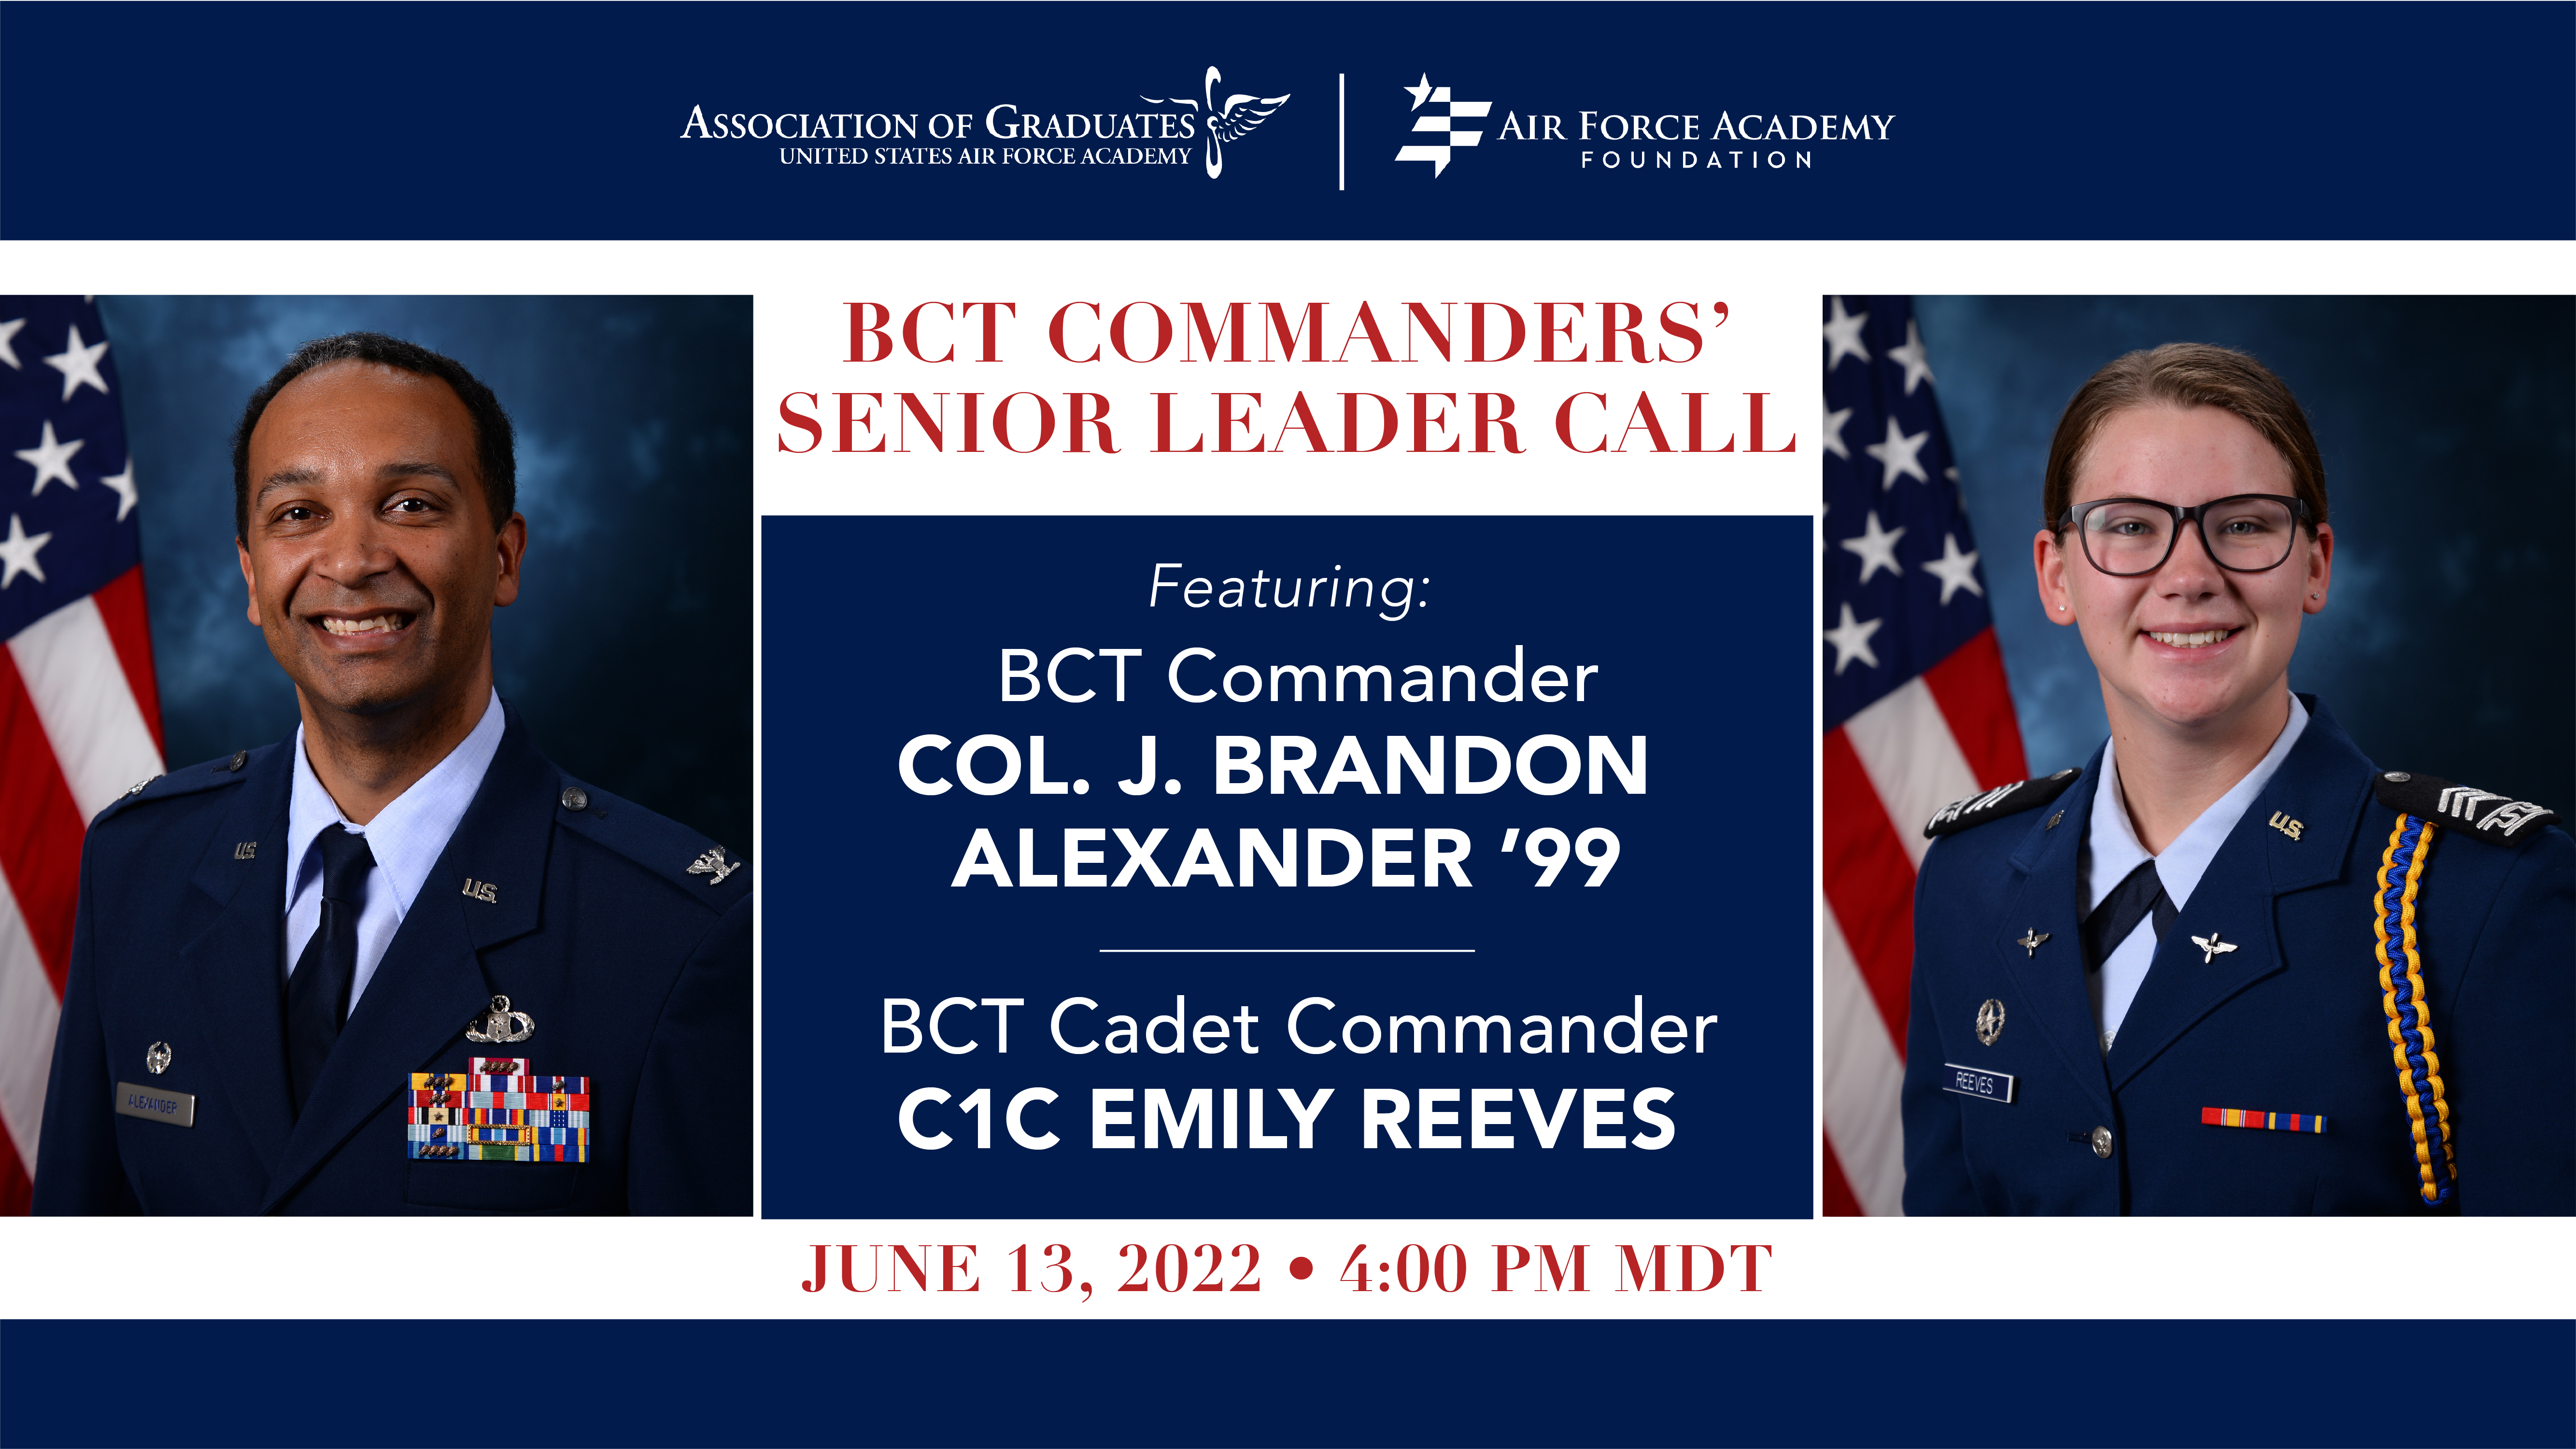 Image for BCT Commanders' Call webinar